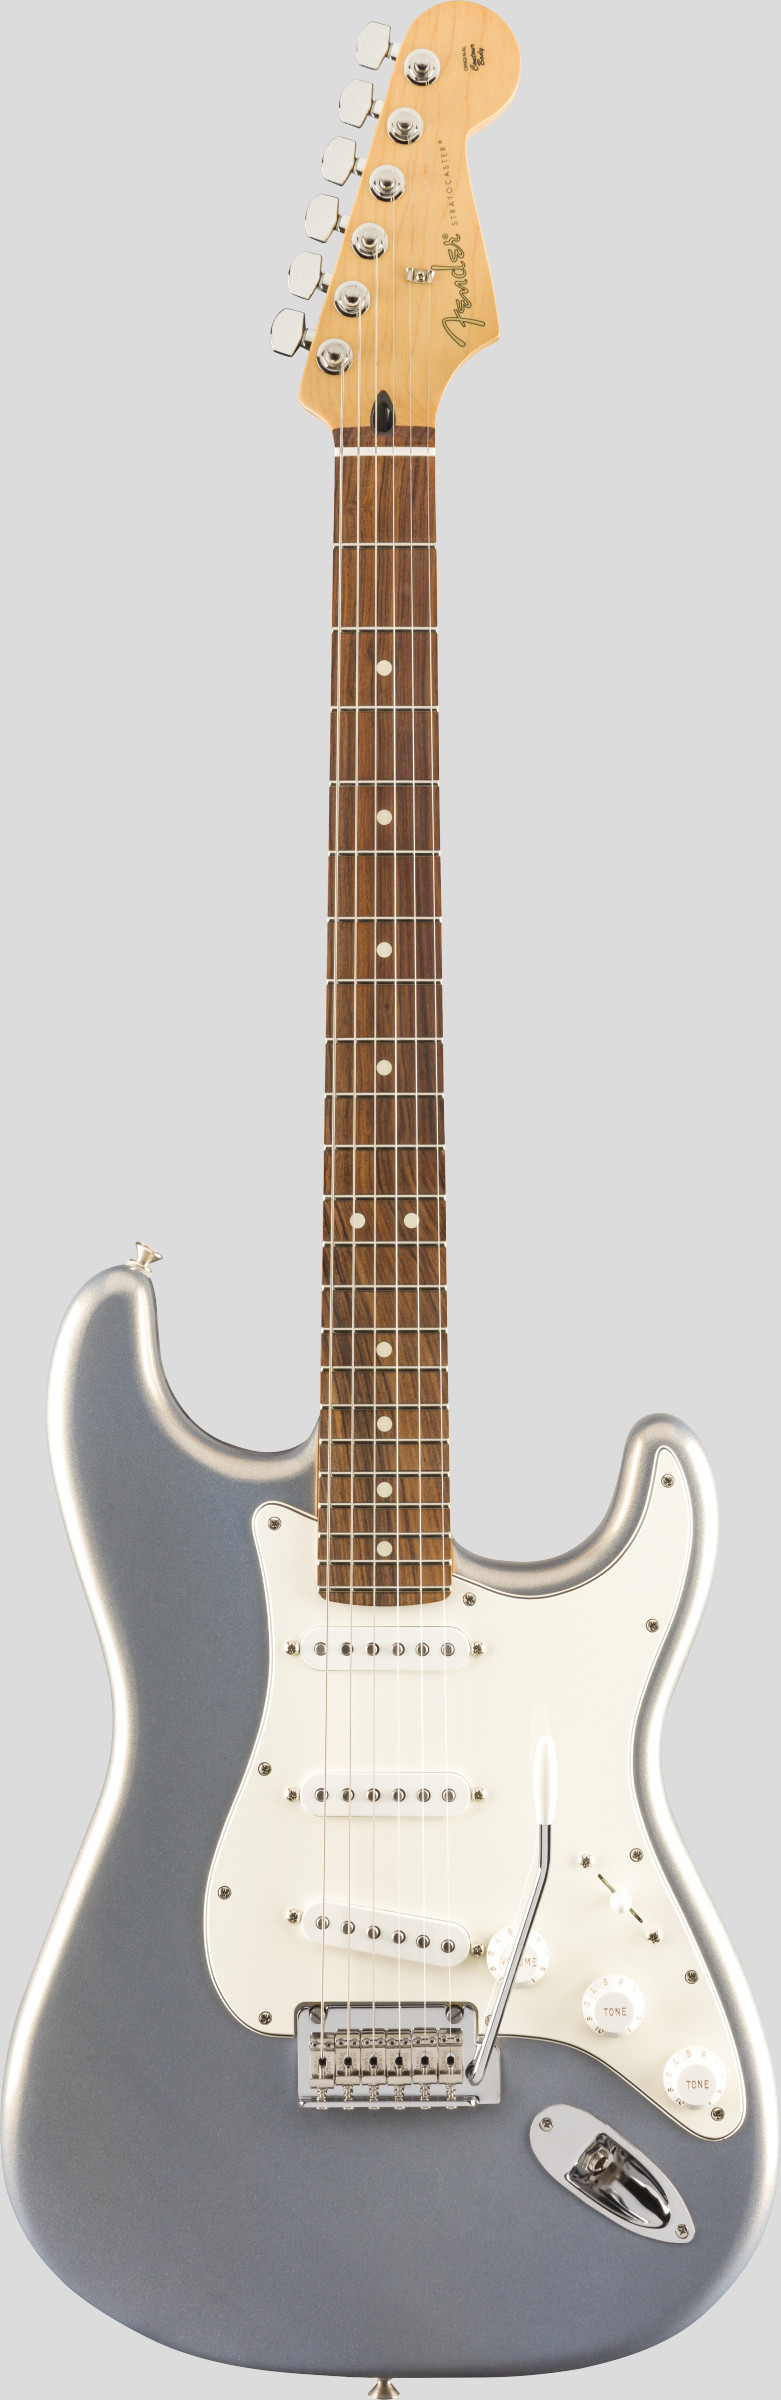 Fender Player Stratocaster Silver 1